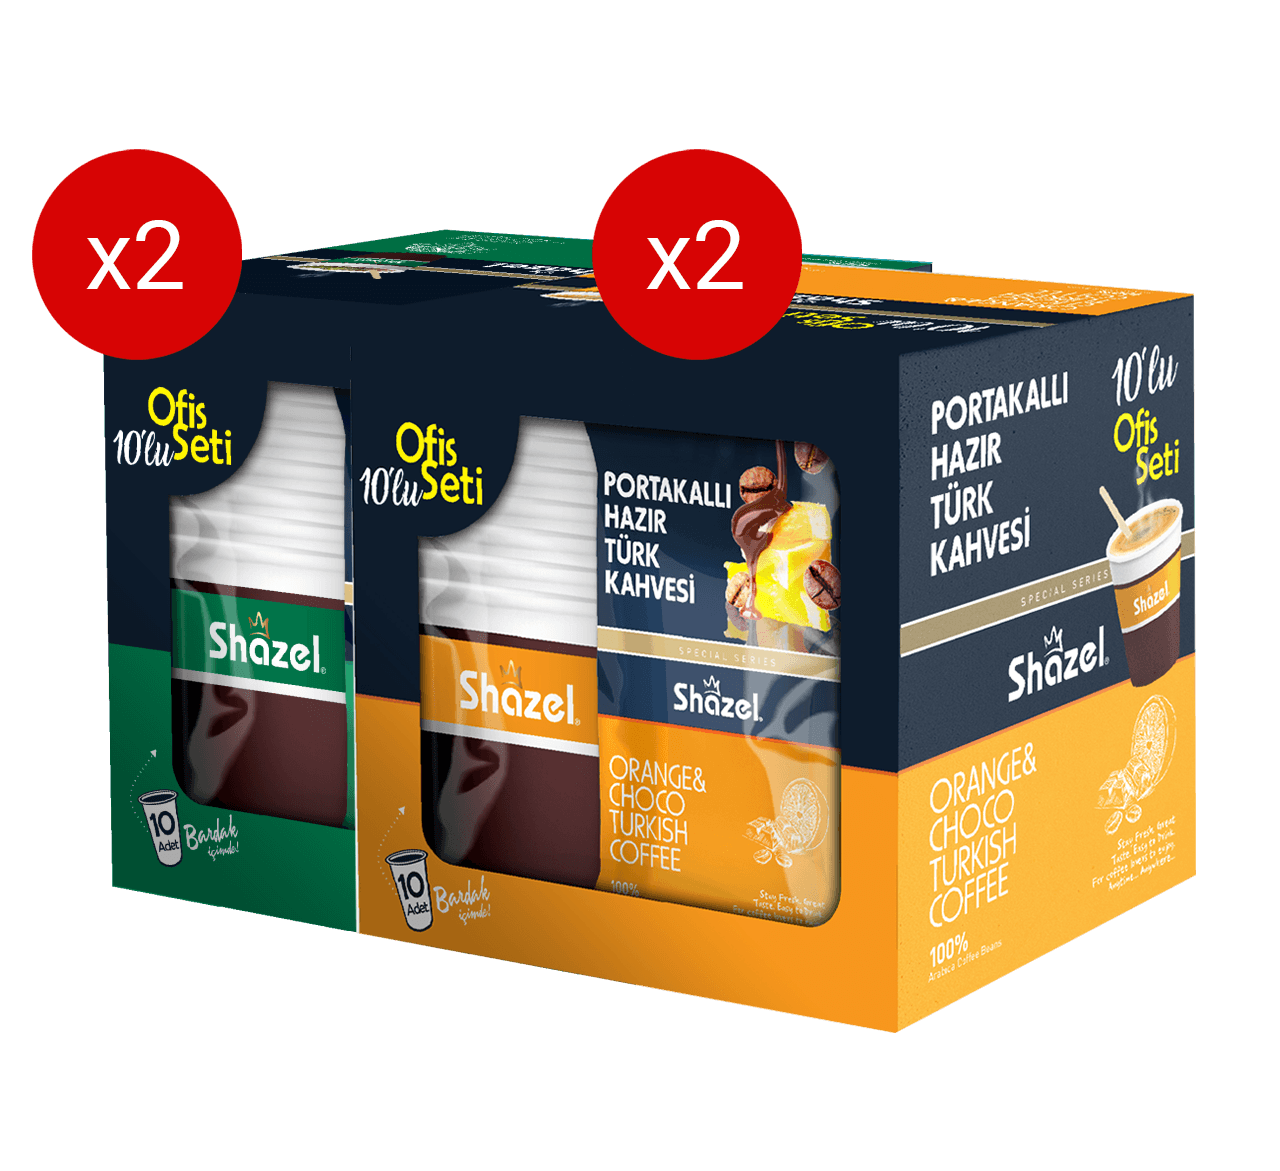 Shazel Mint&Orange Chocolate Turkish Coffee Office Set 4 Box/40 Pieces